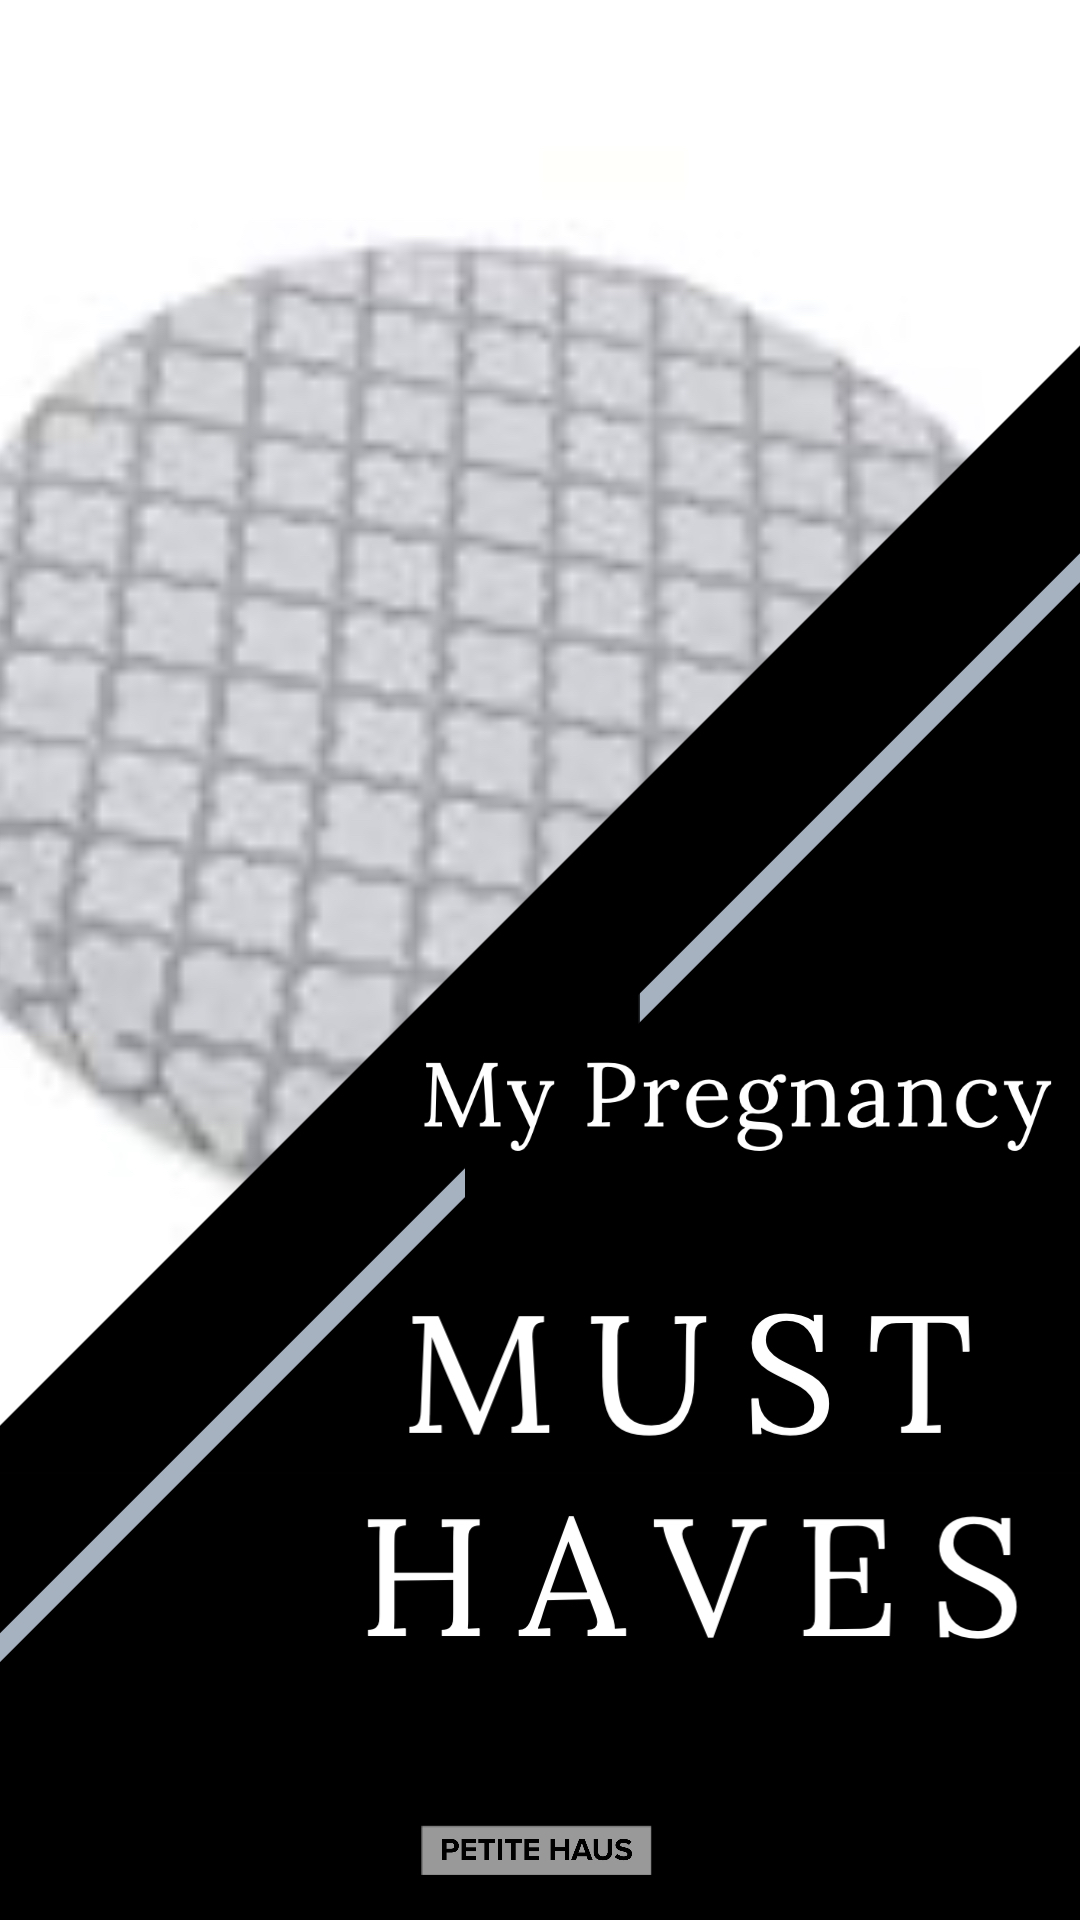 pregnancy must haves, pregnancy essentials, maternity essentials, maternity must haves